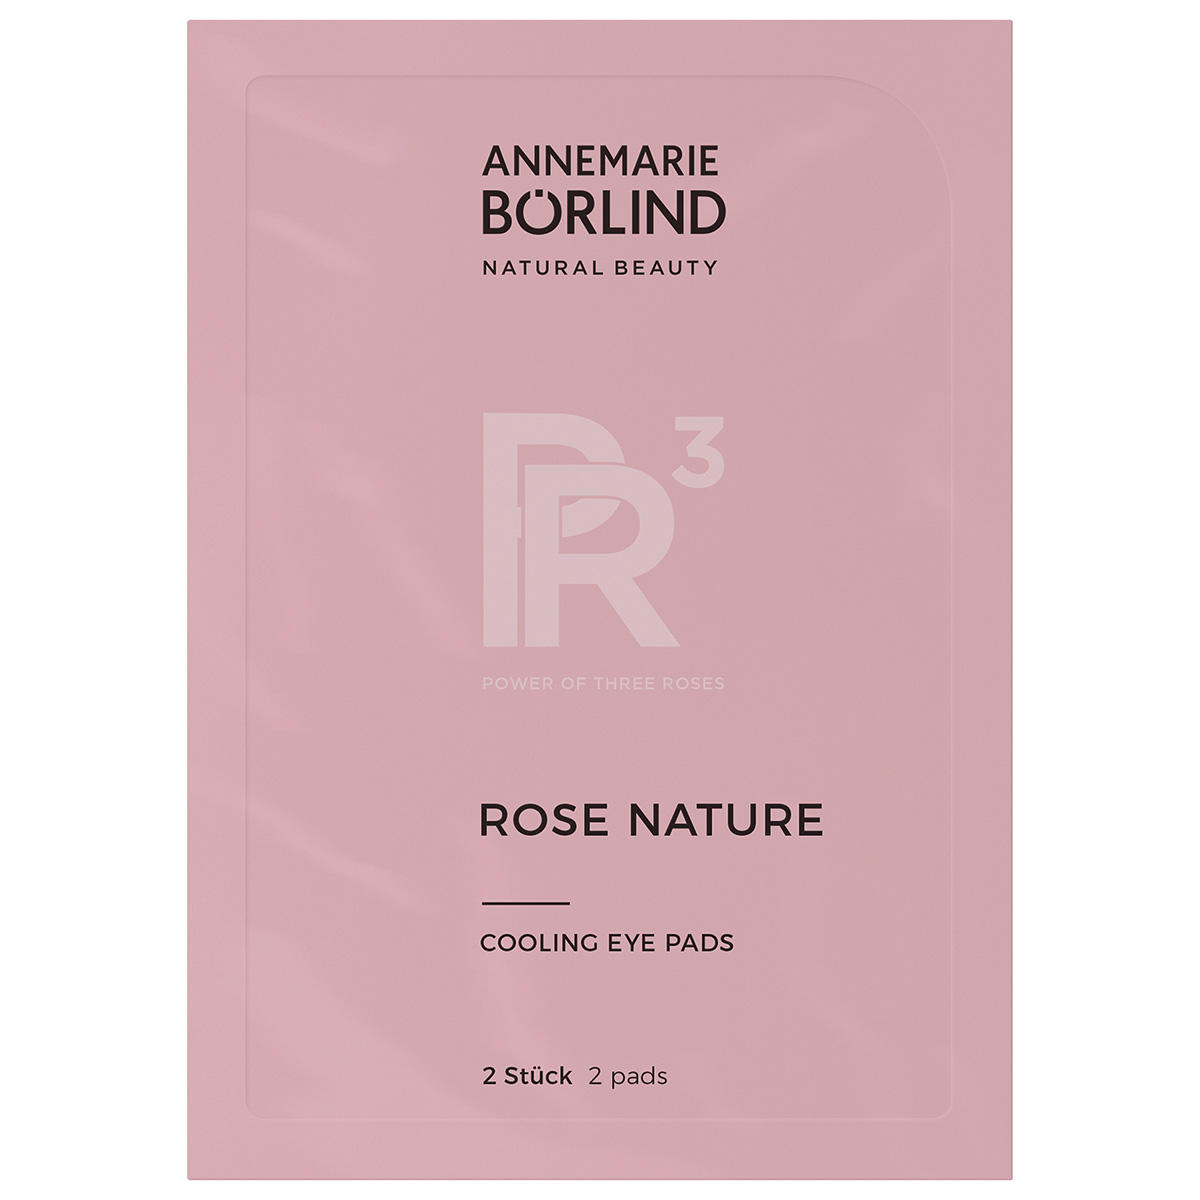 ANNEMARIE BÖRLIND ROSE NATURE Cooling Eye Pads 6 x 2 Stück - 1